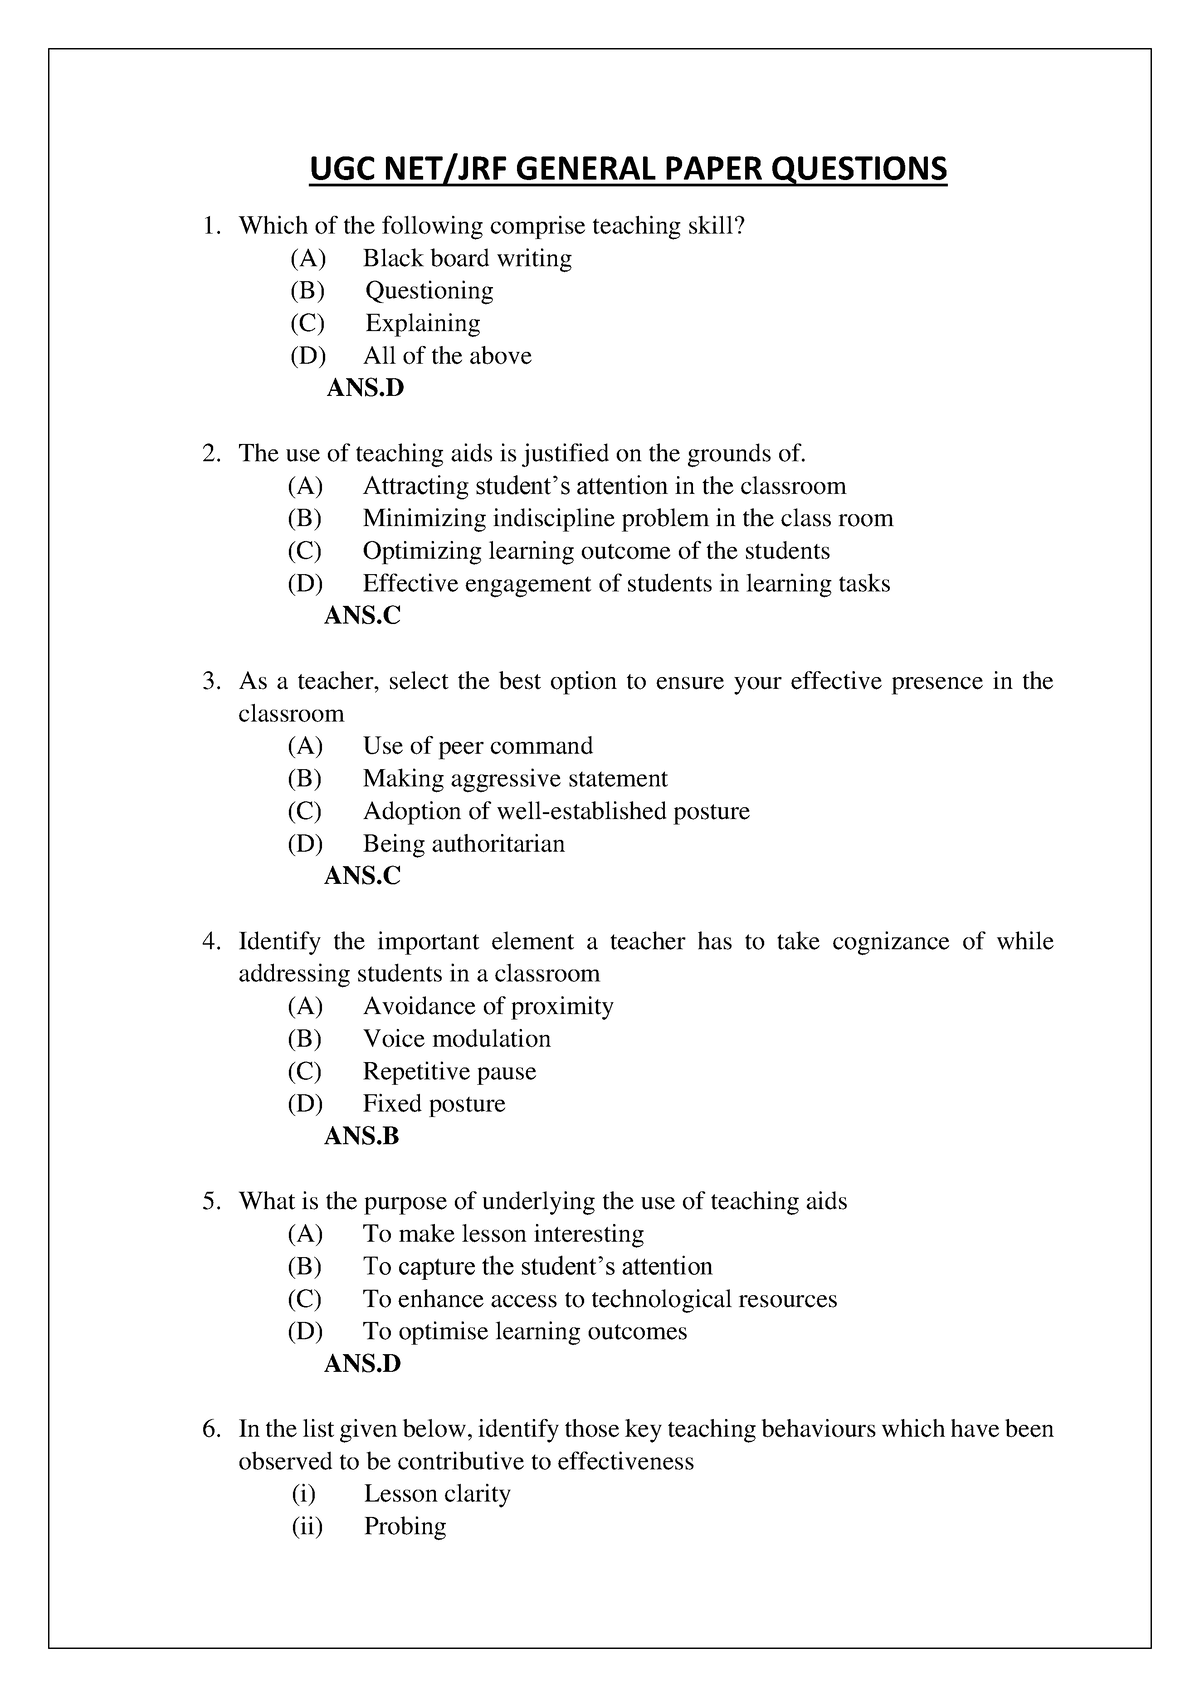 UGC NET JRF General Paper Questions - UGC NET/JRF GENERAL PAPER